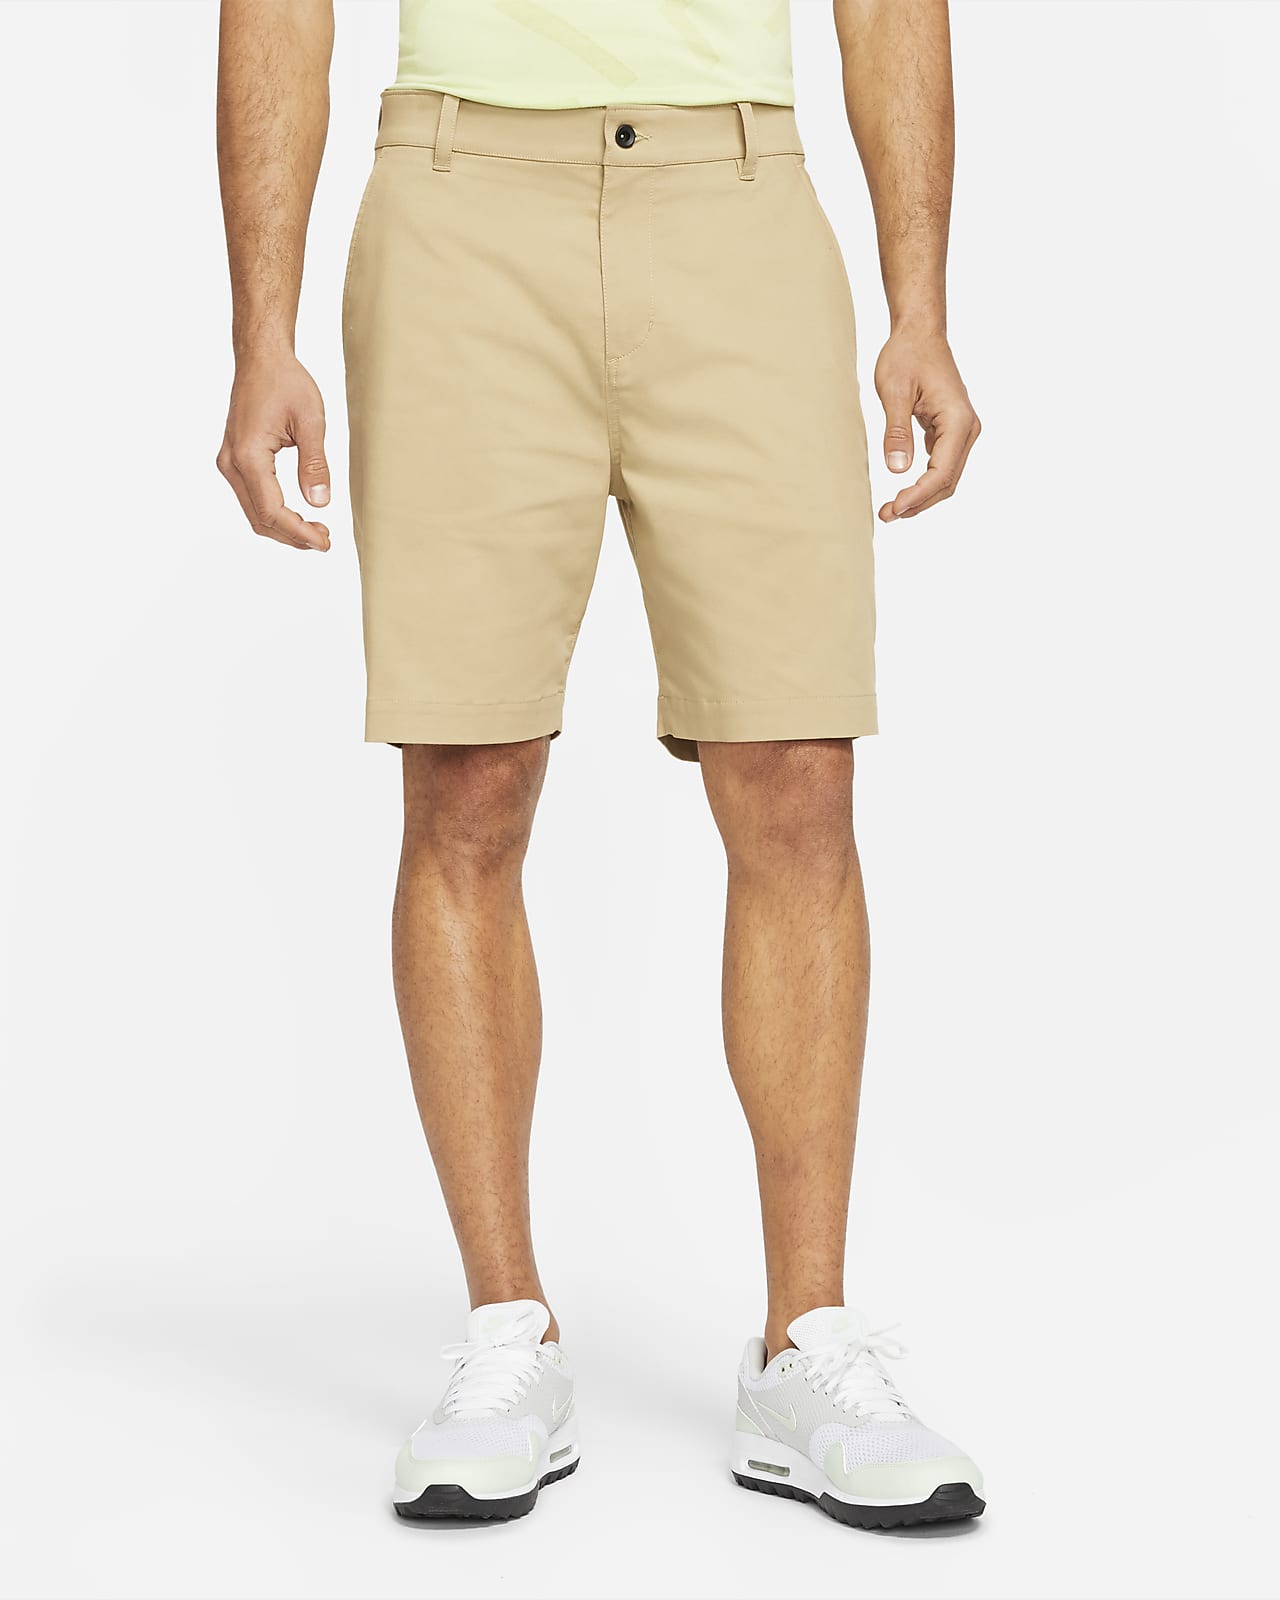 Nike Dri-FIT UV Men's 9" Golf Chino Shorts